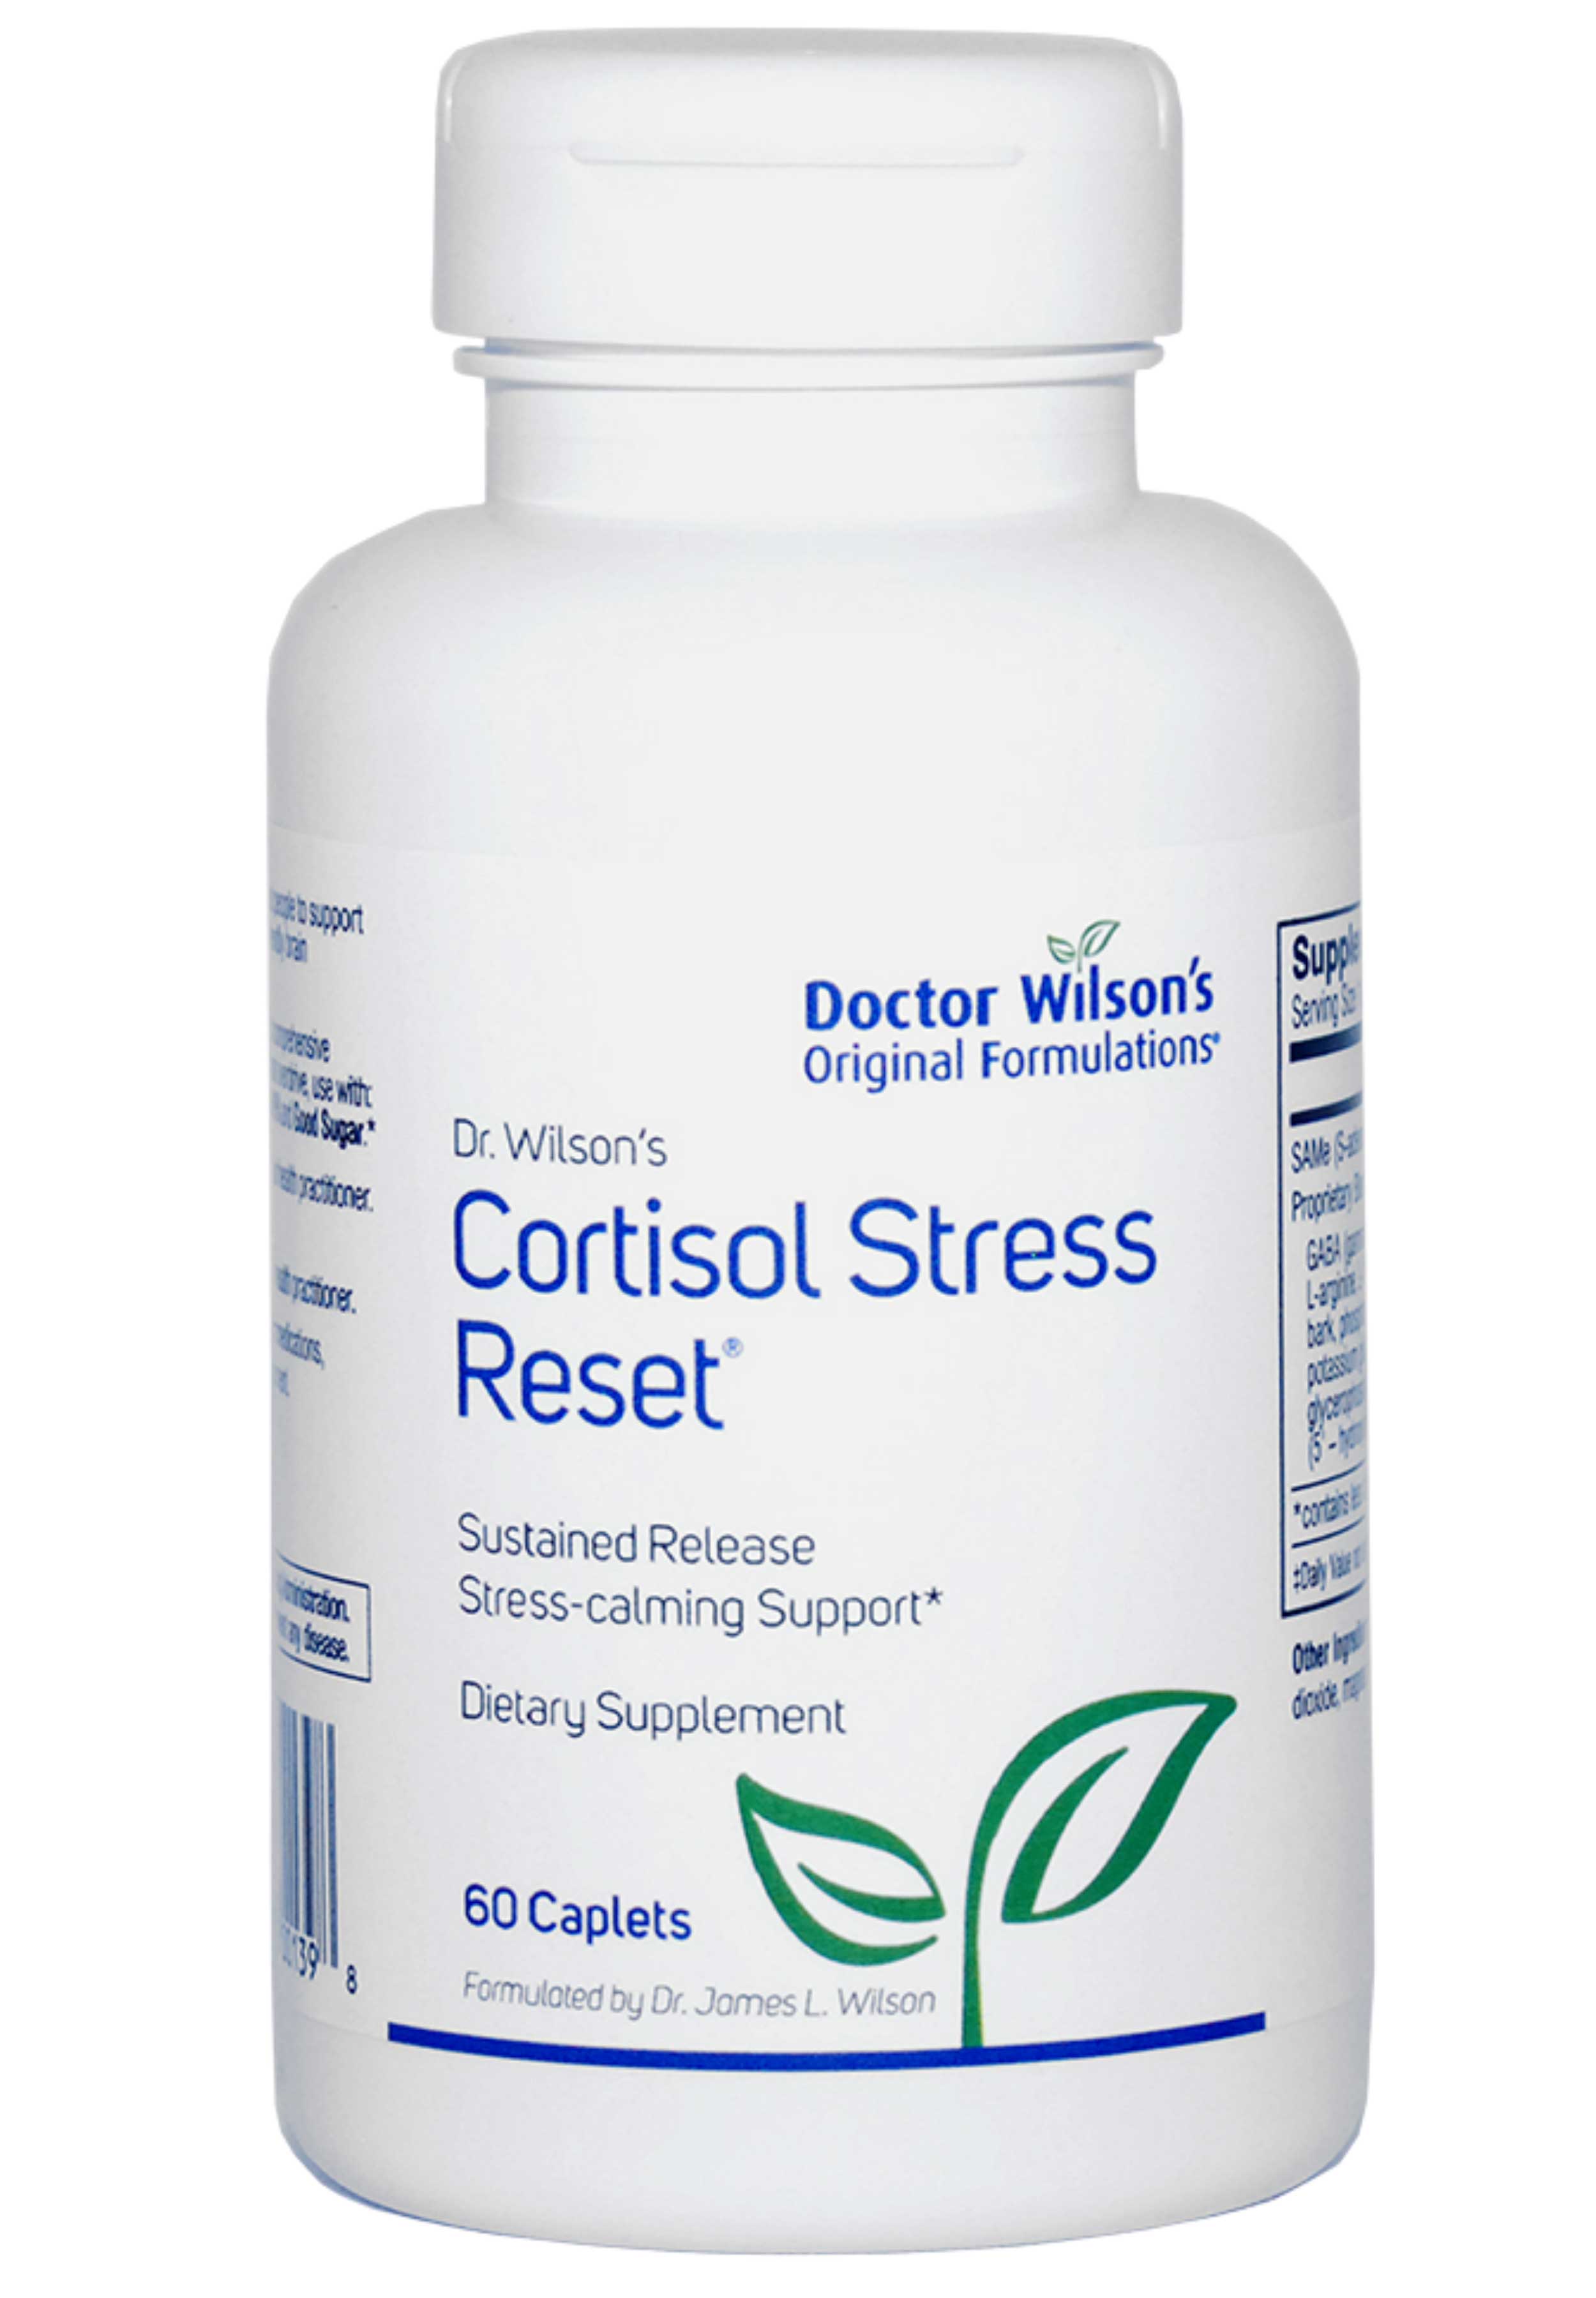 Doctor Wilson's Original Formulations Cortisol Stress Reset